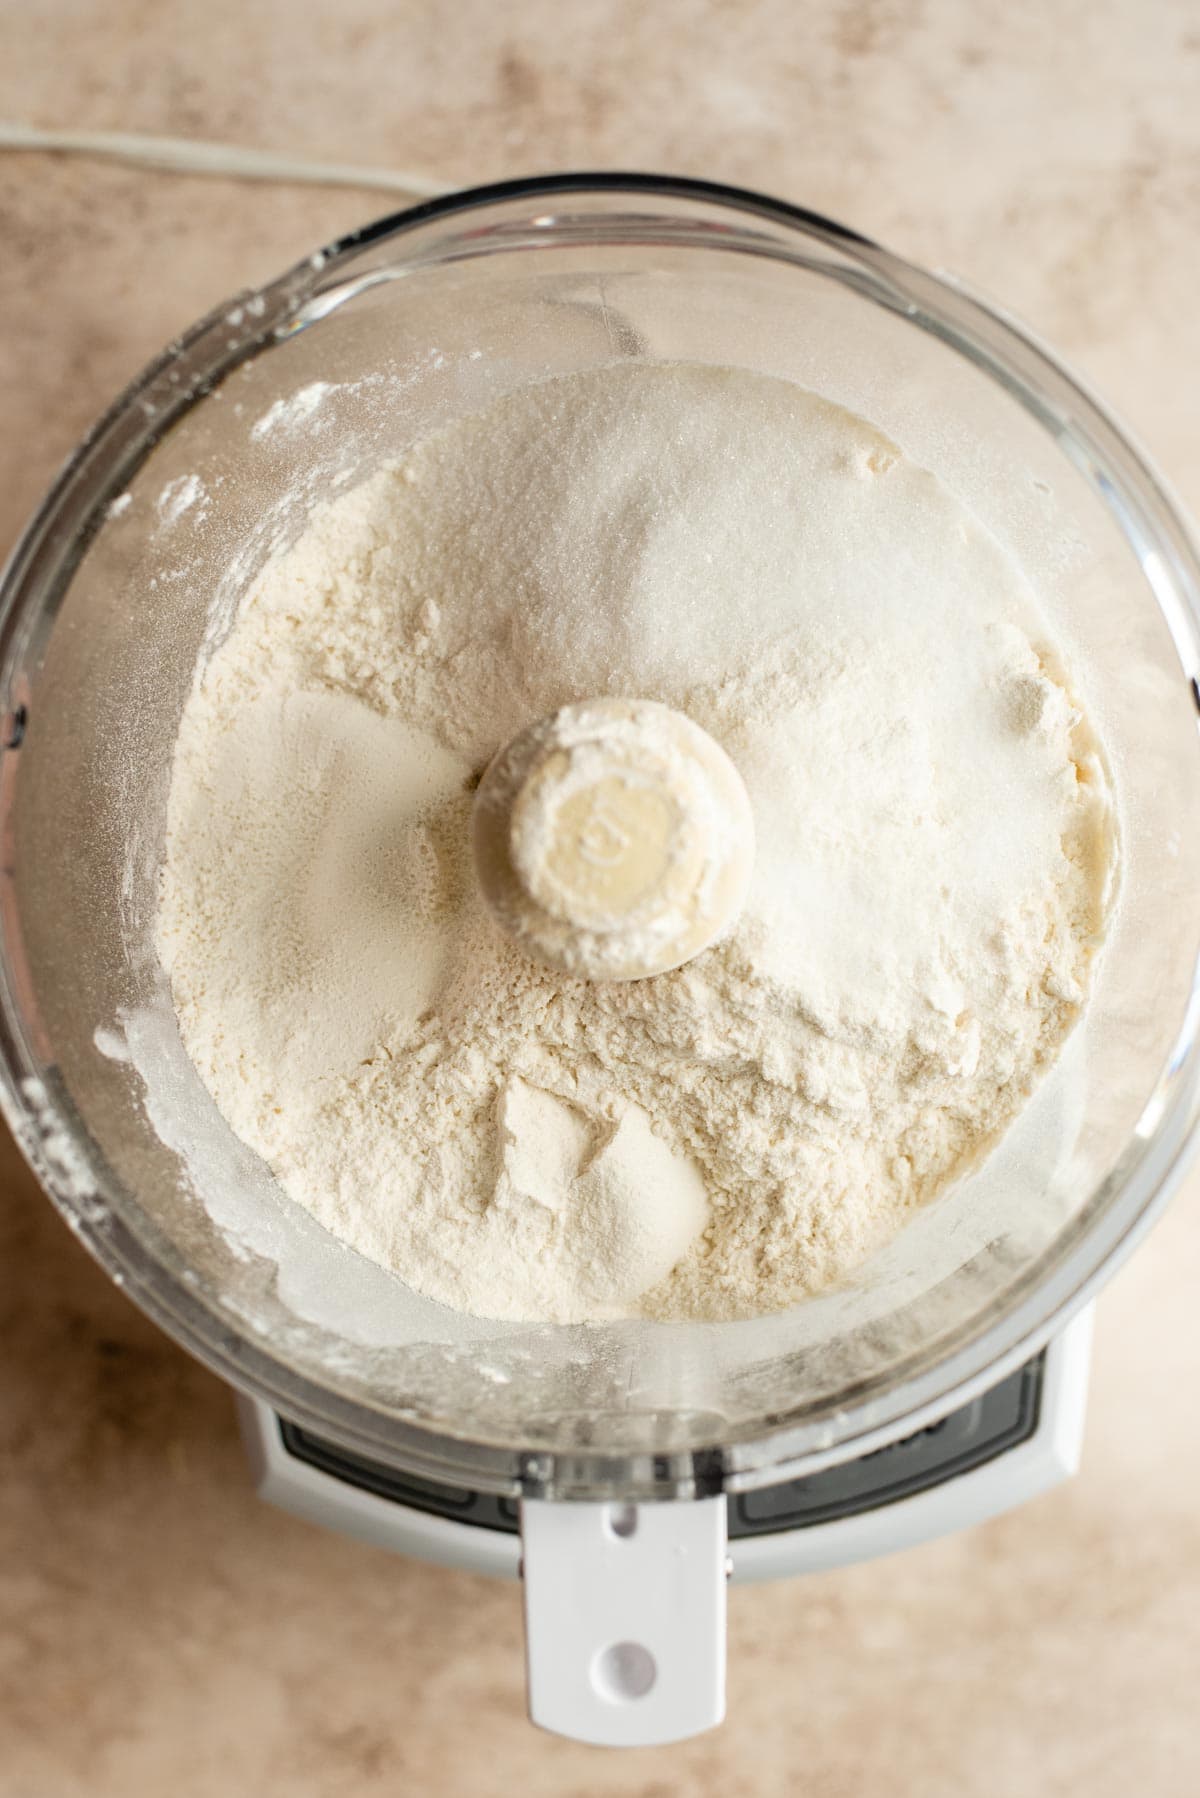 Flour and sugar in a food processor.